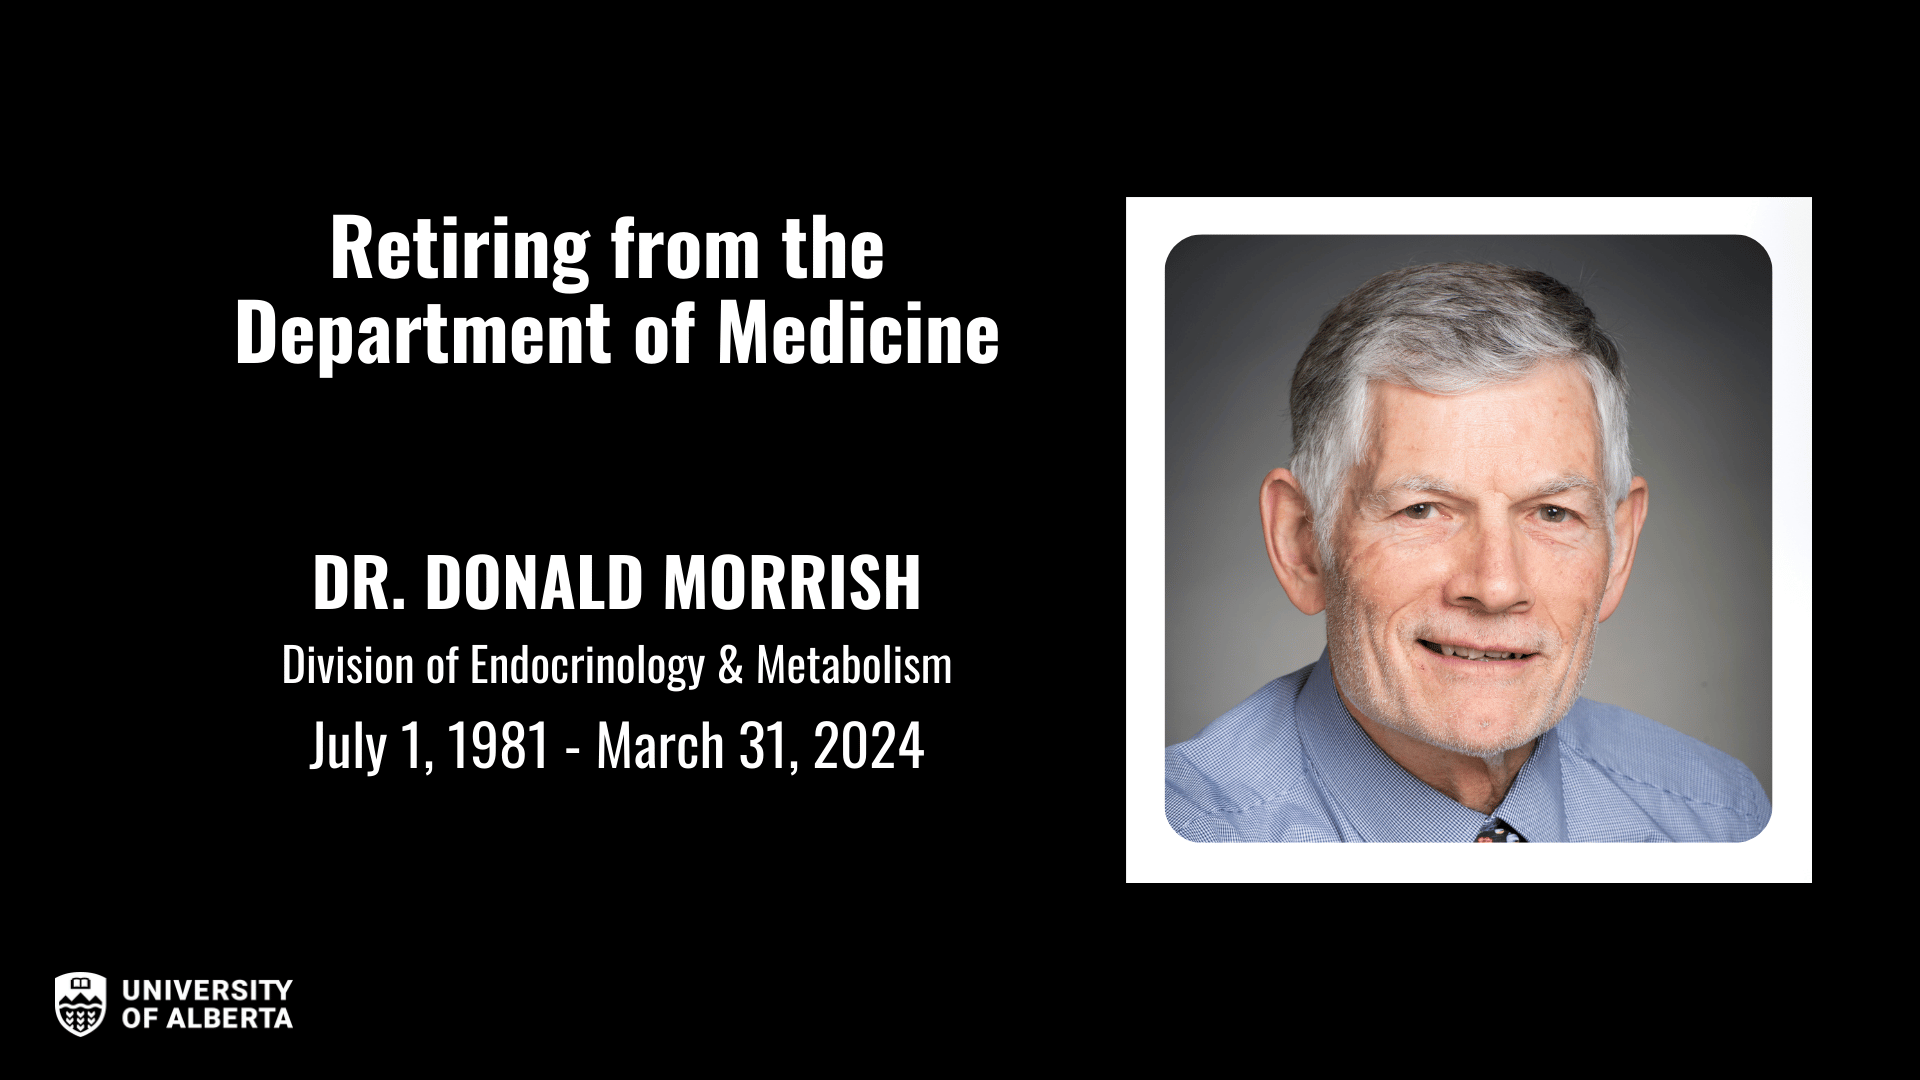 Dr. Donald Morrish